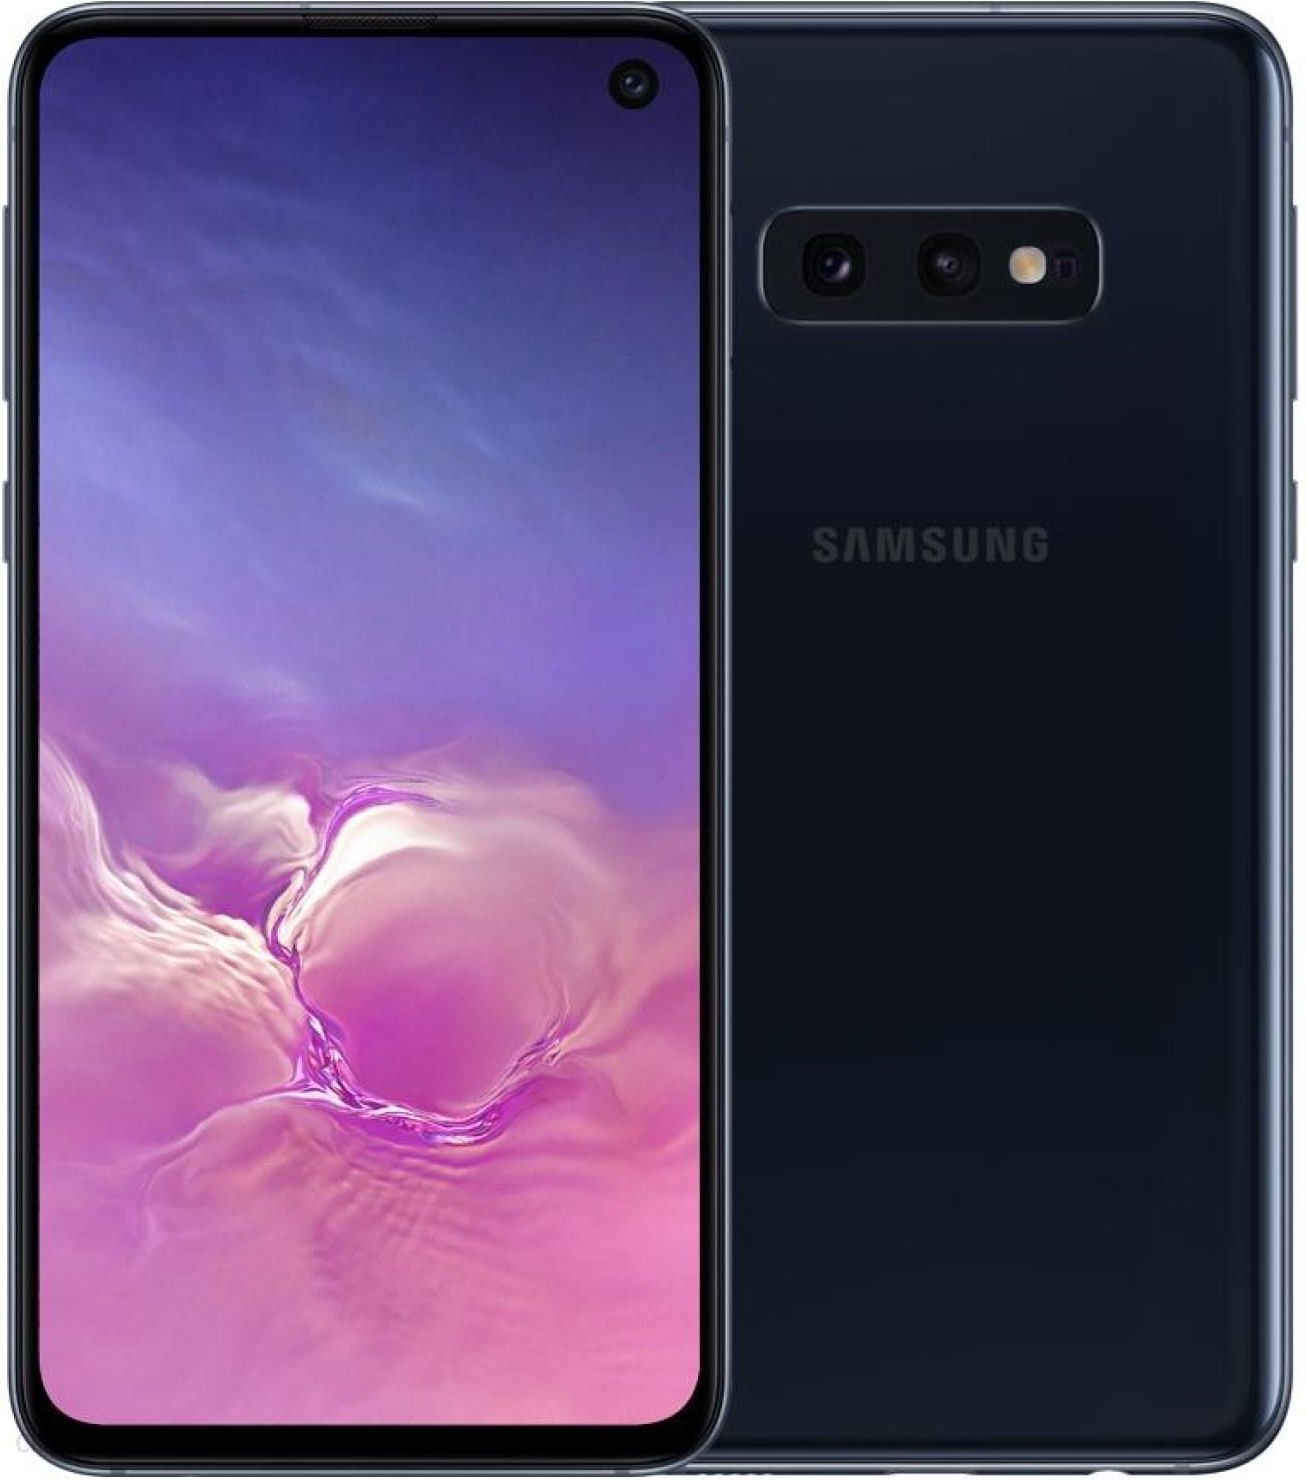  Samsung Galaxy S10e SM-G970 8/128GB Prism Black